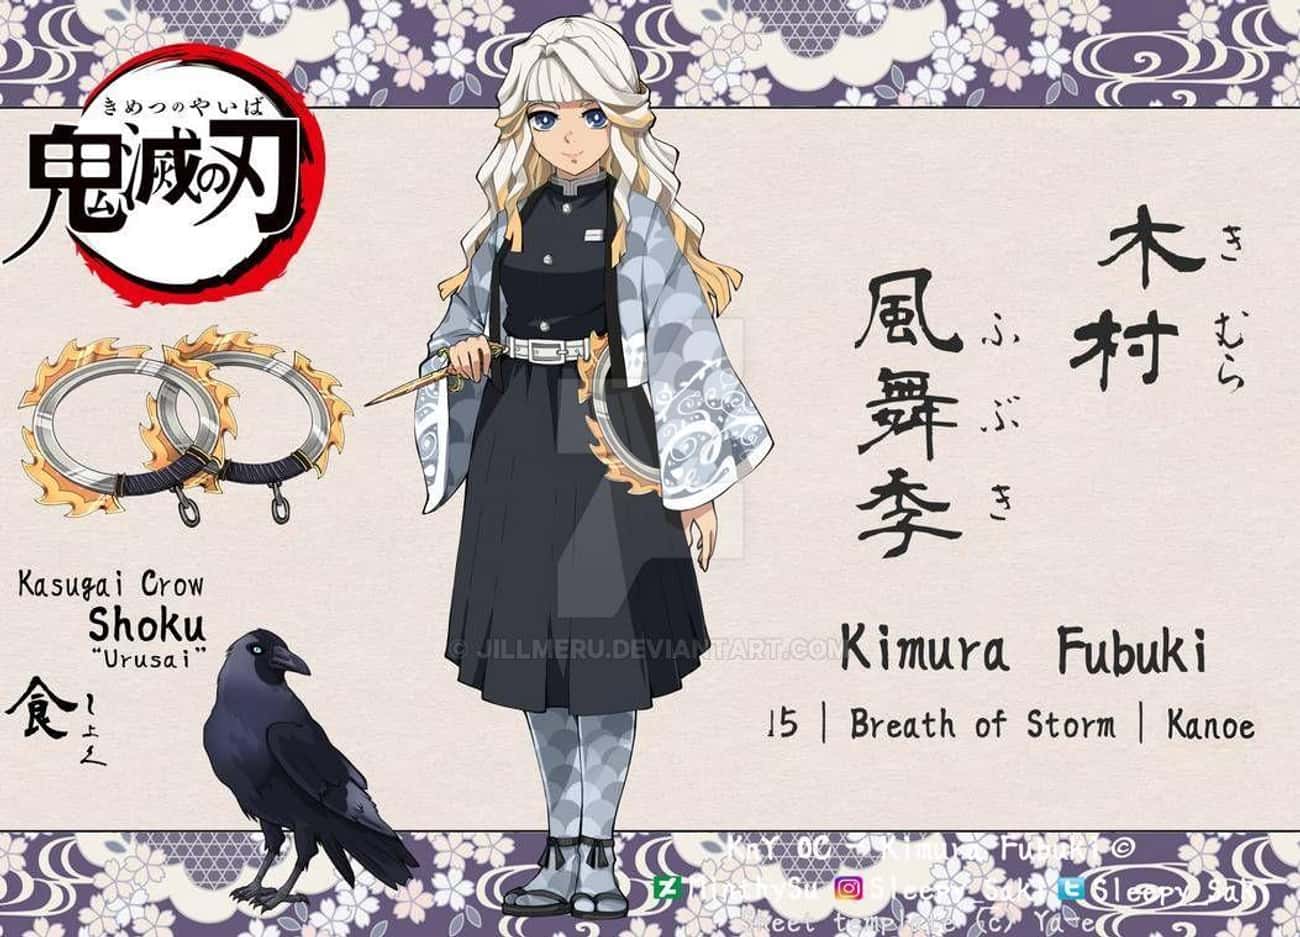 Kimura Fubuki